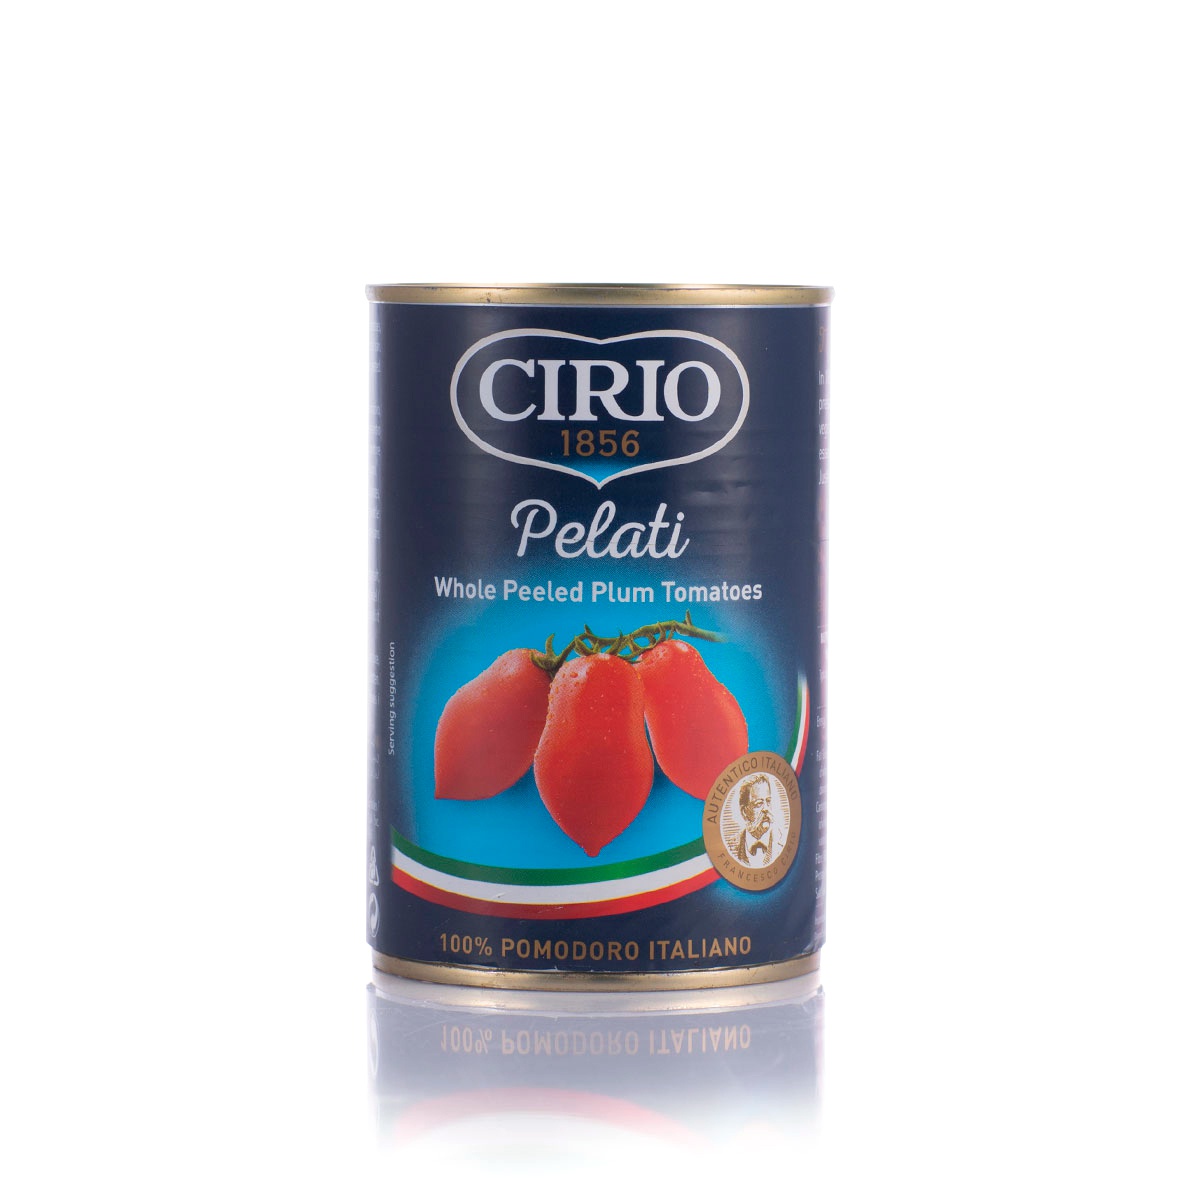 Cirio Whole Peeled Plum Tomatoes 400G - CIRIO - Processed/ Preserved Vegetables - in Sri Lanka